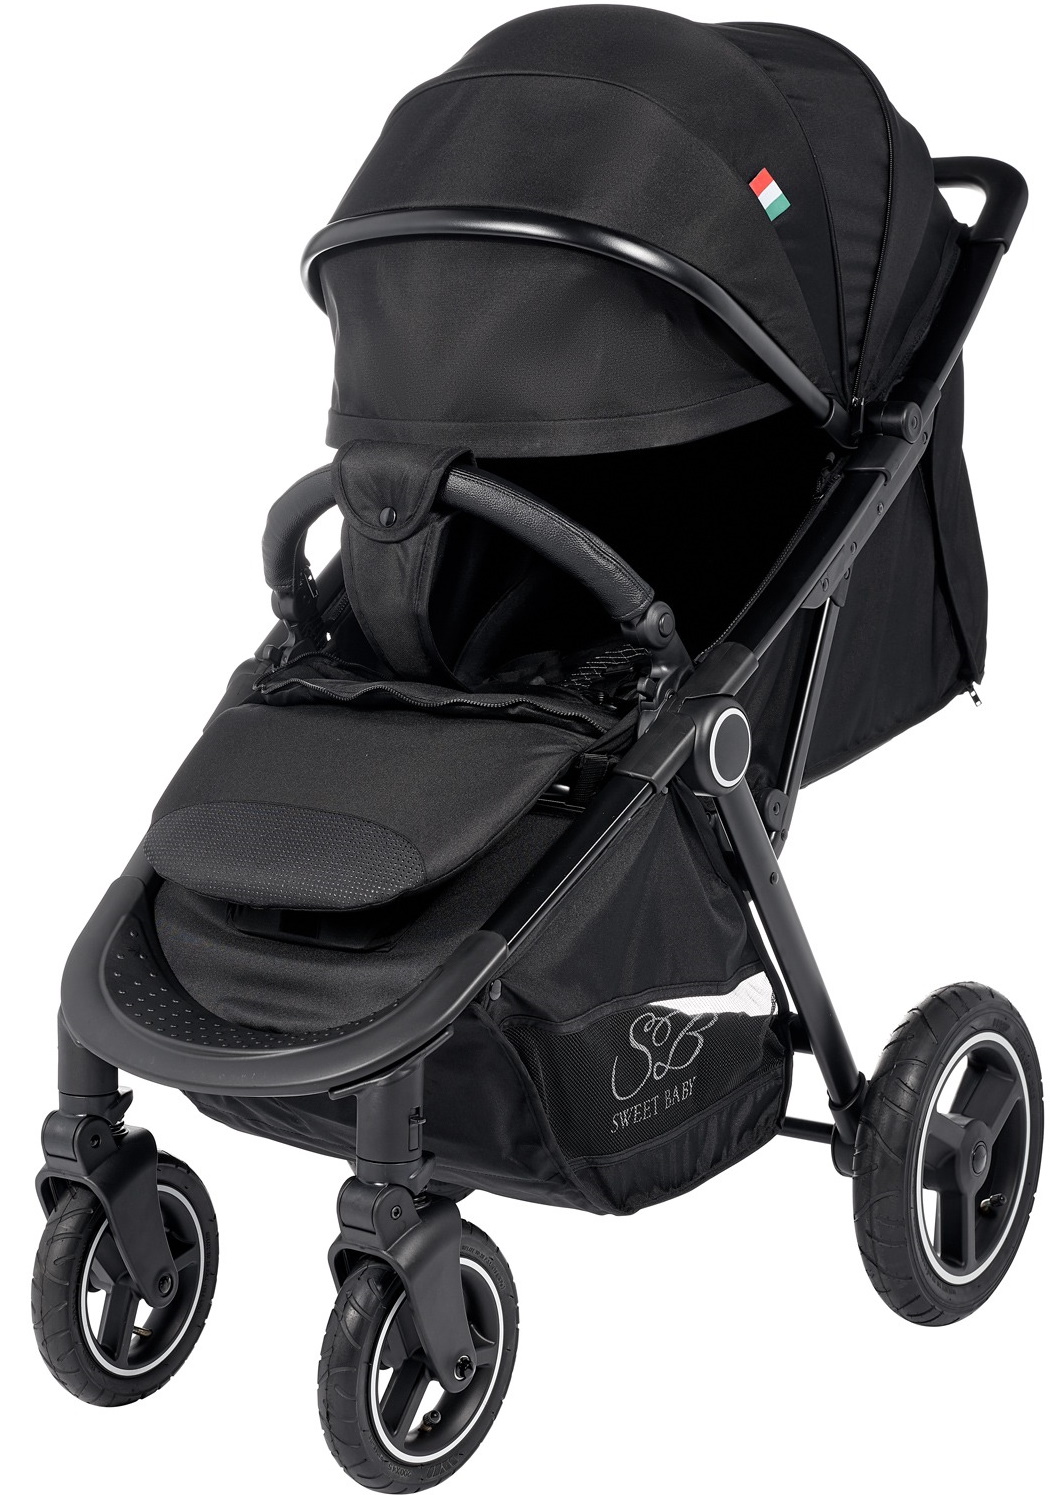 Прогулочная коляска Sweet Baby Suburban Compatto Air, цвет: черный прогулочная коляска sweet baby suburban compatto silver gray